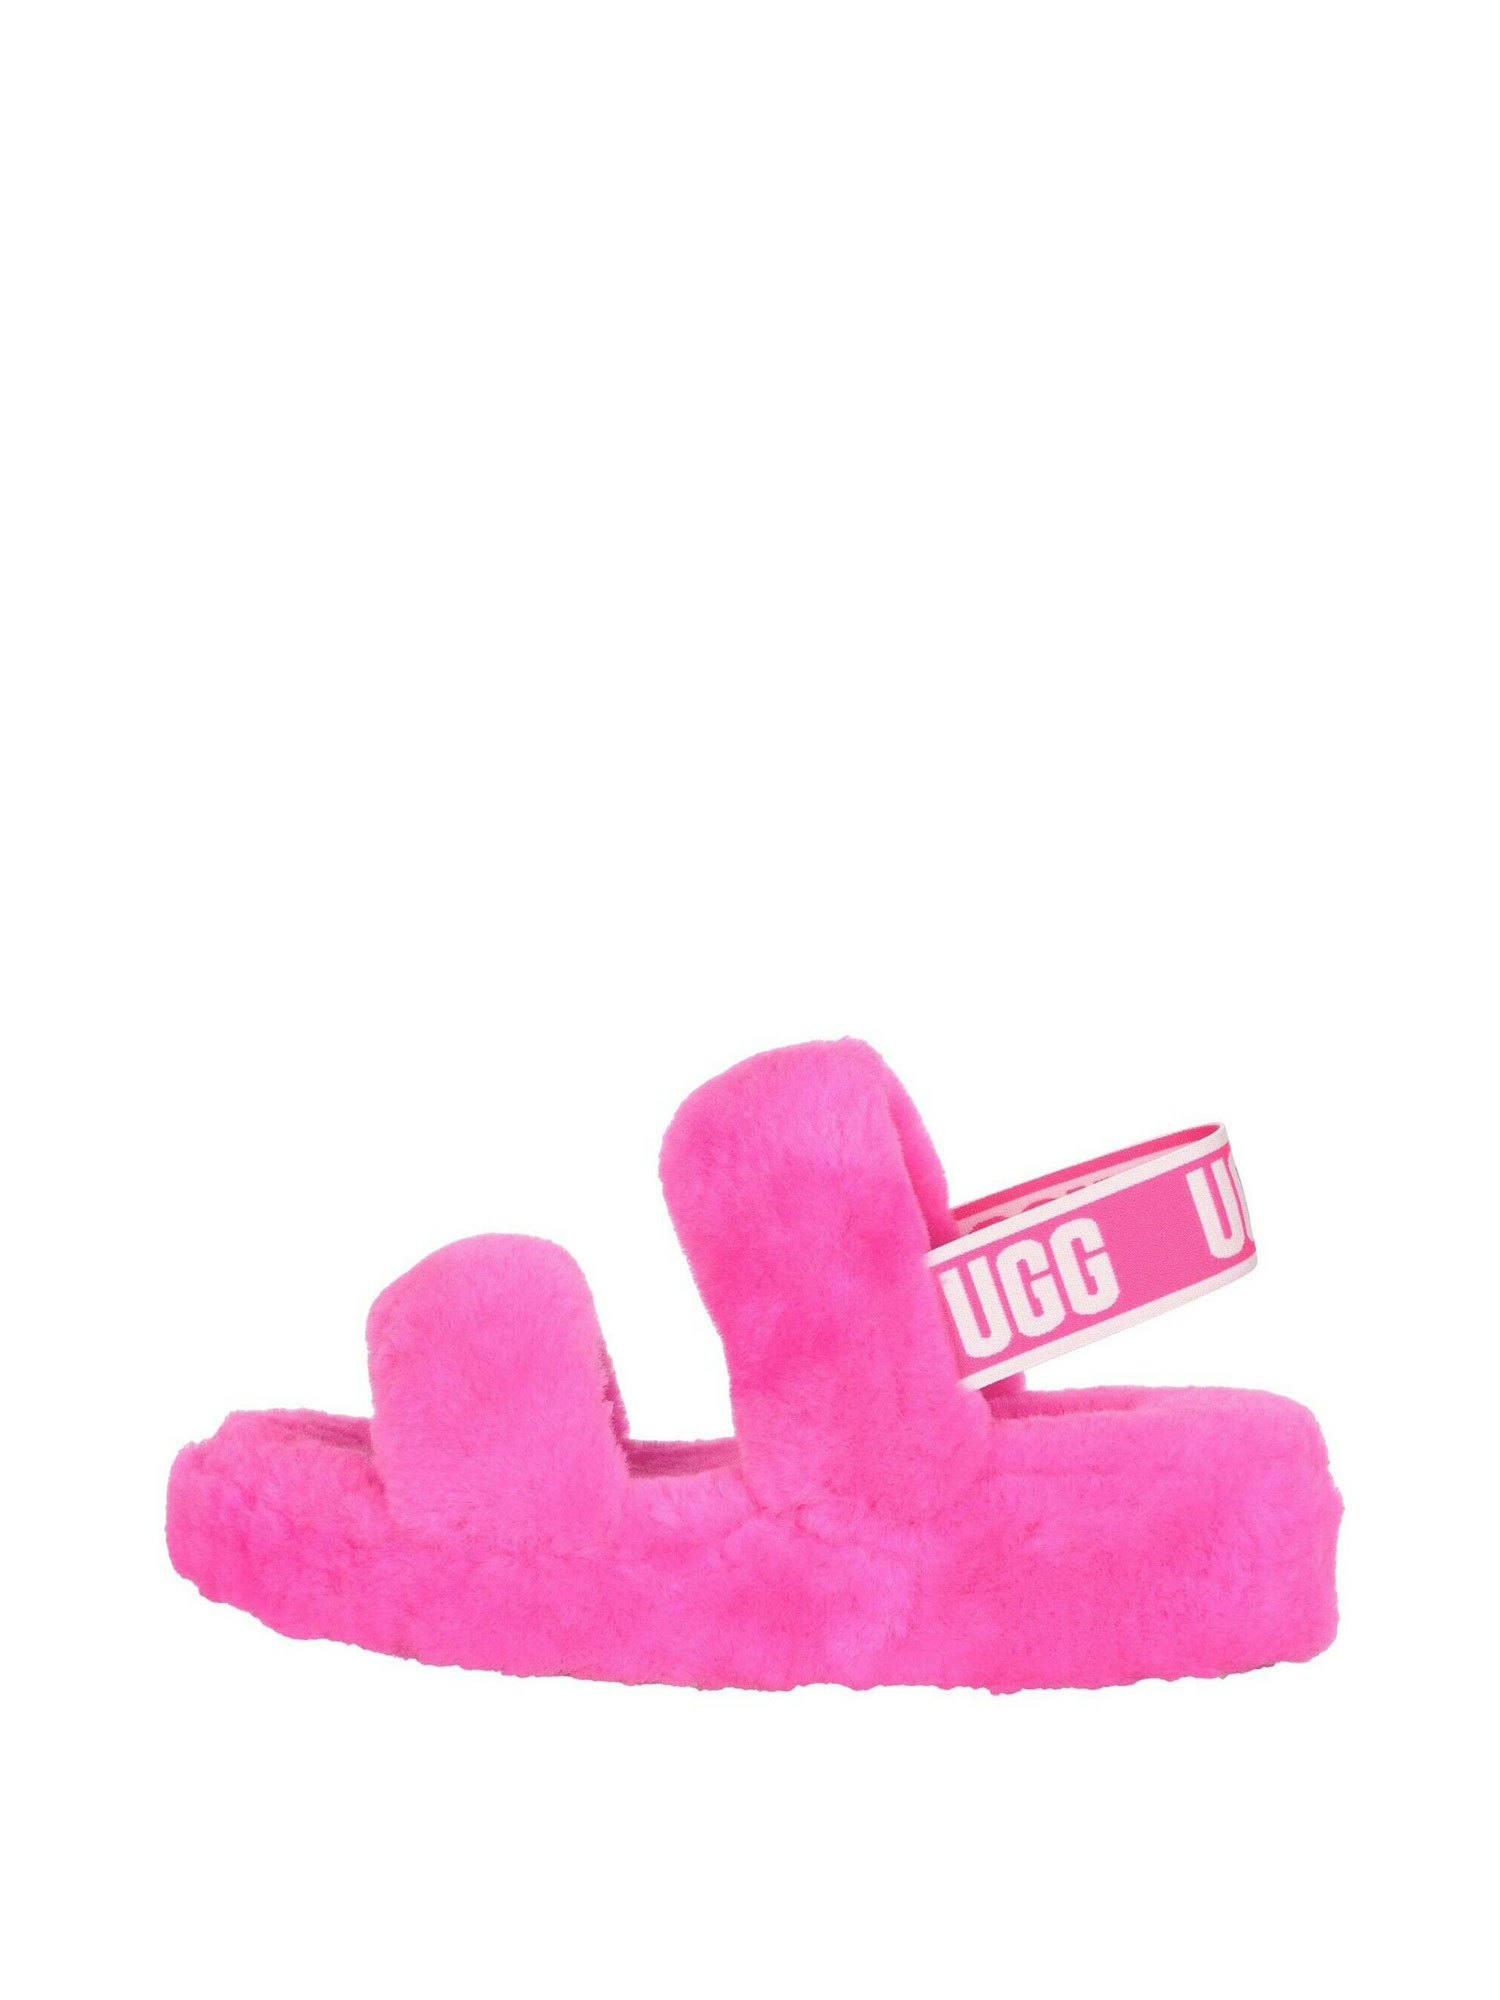 UGG Oh Yeah Slide Women's Sheepskin Slipper Sandals 1107953 - image 4 of 5